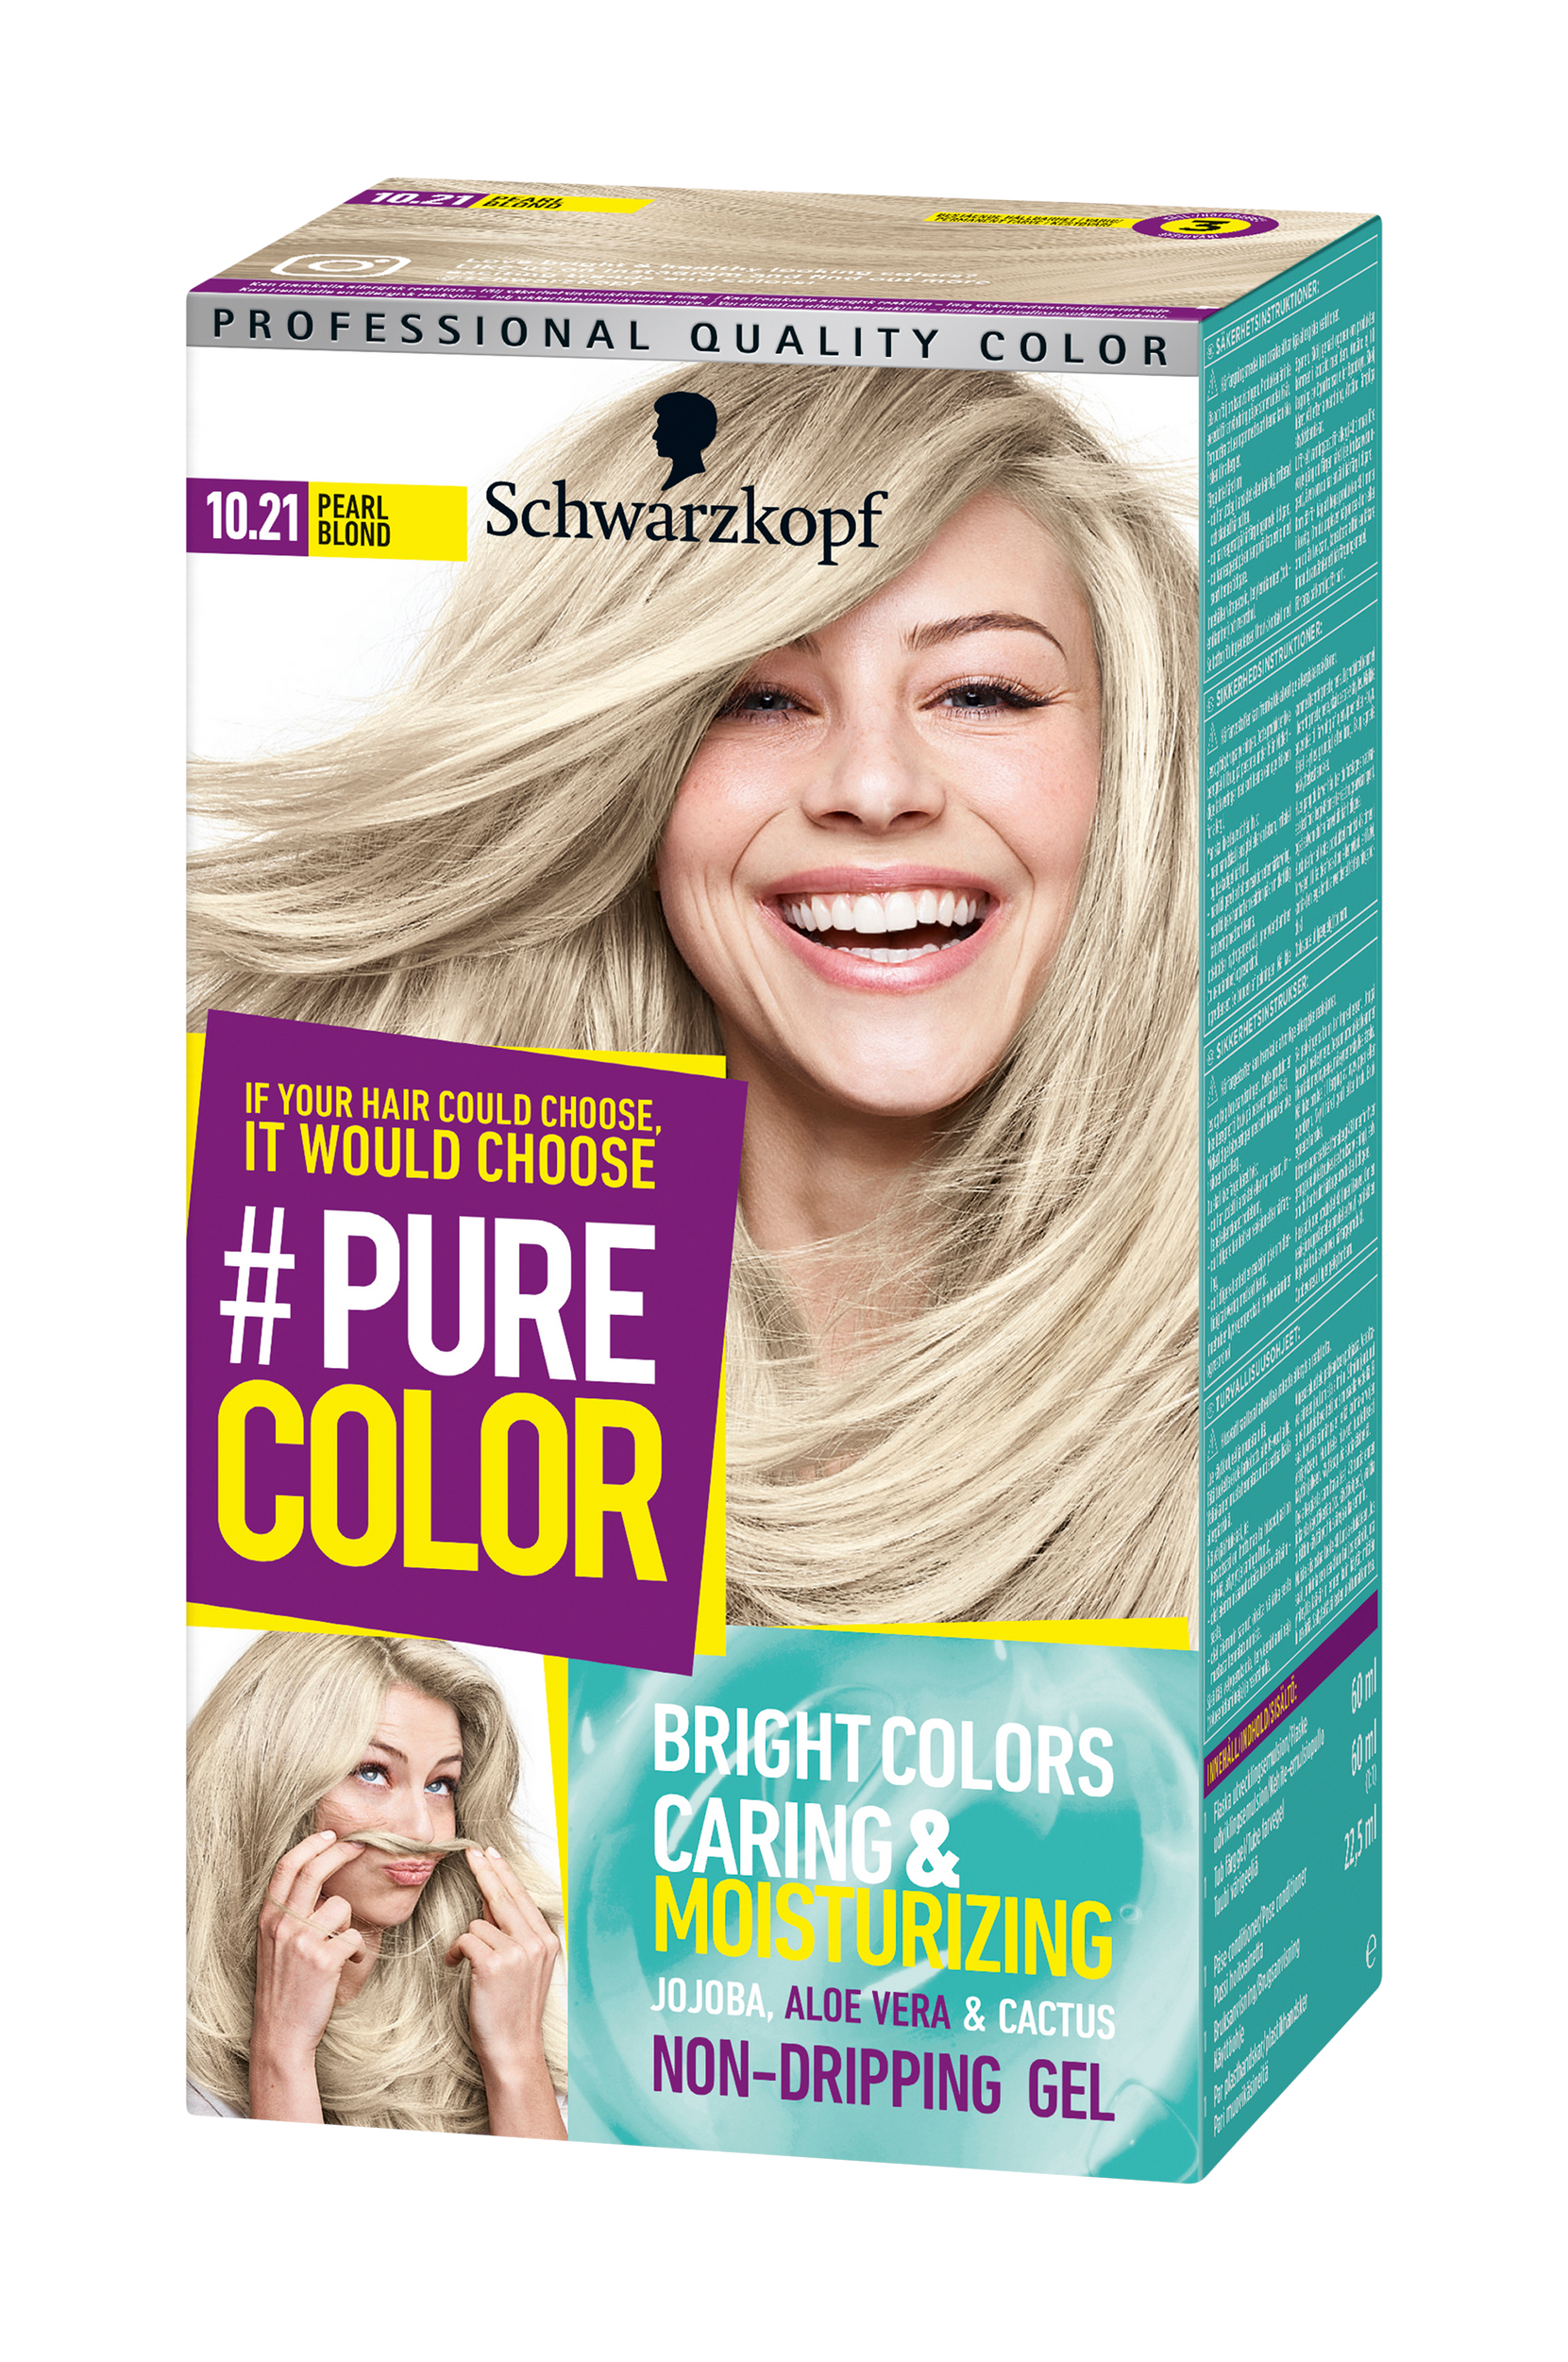 Pure Color 10.21 Pearl Blonde, Schwarzkopf